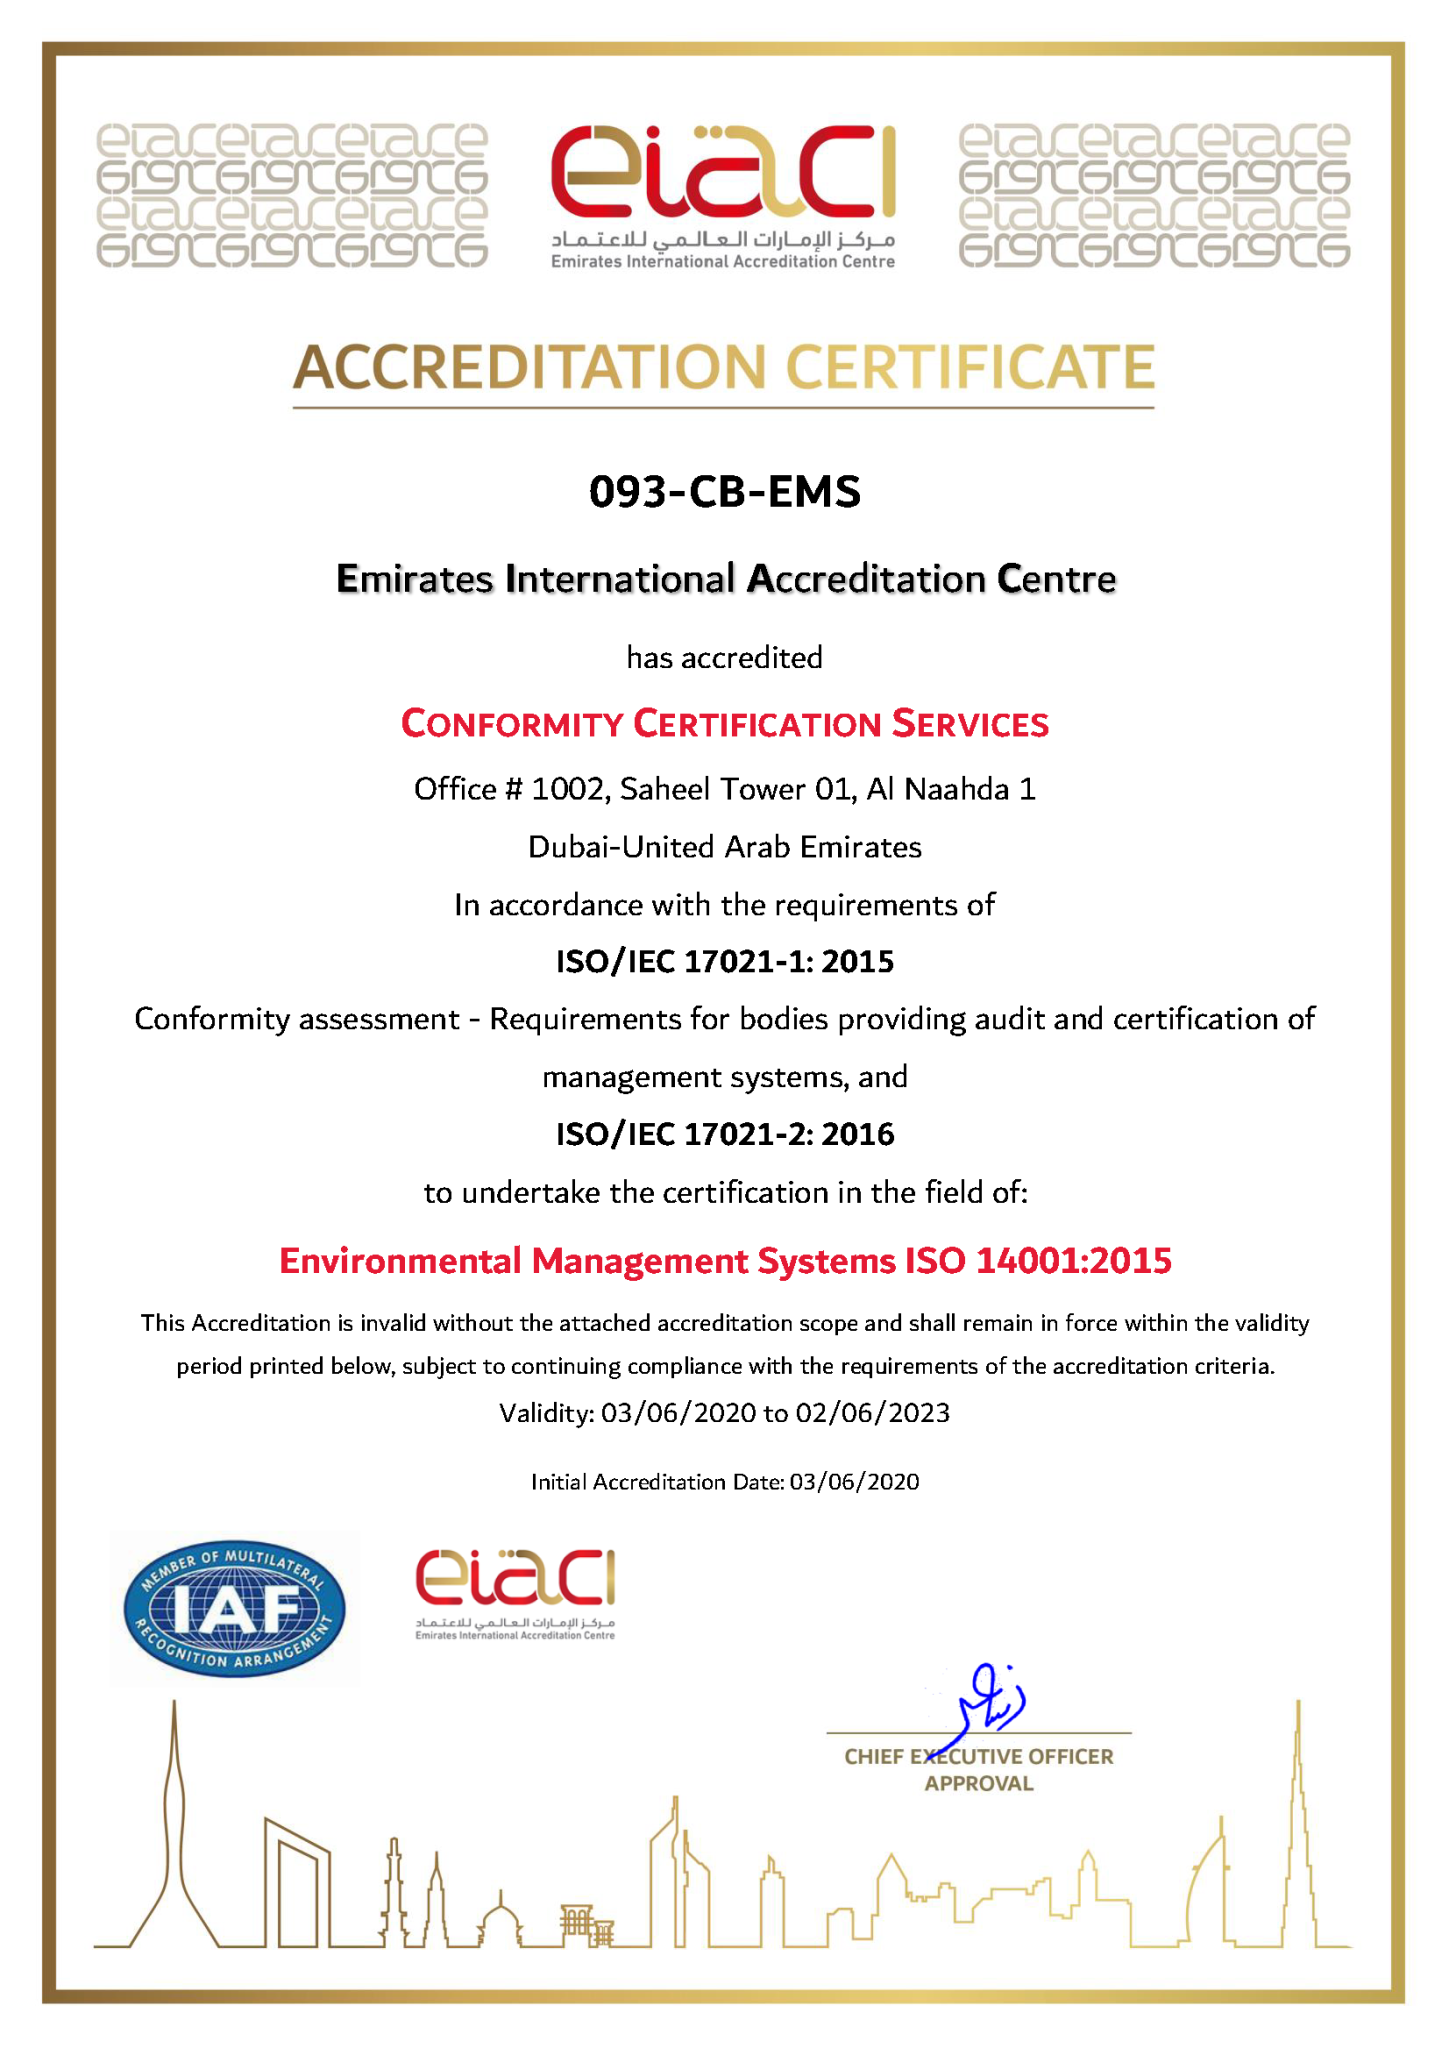 Accreditation Conformity Certification